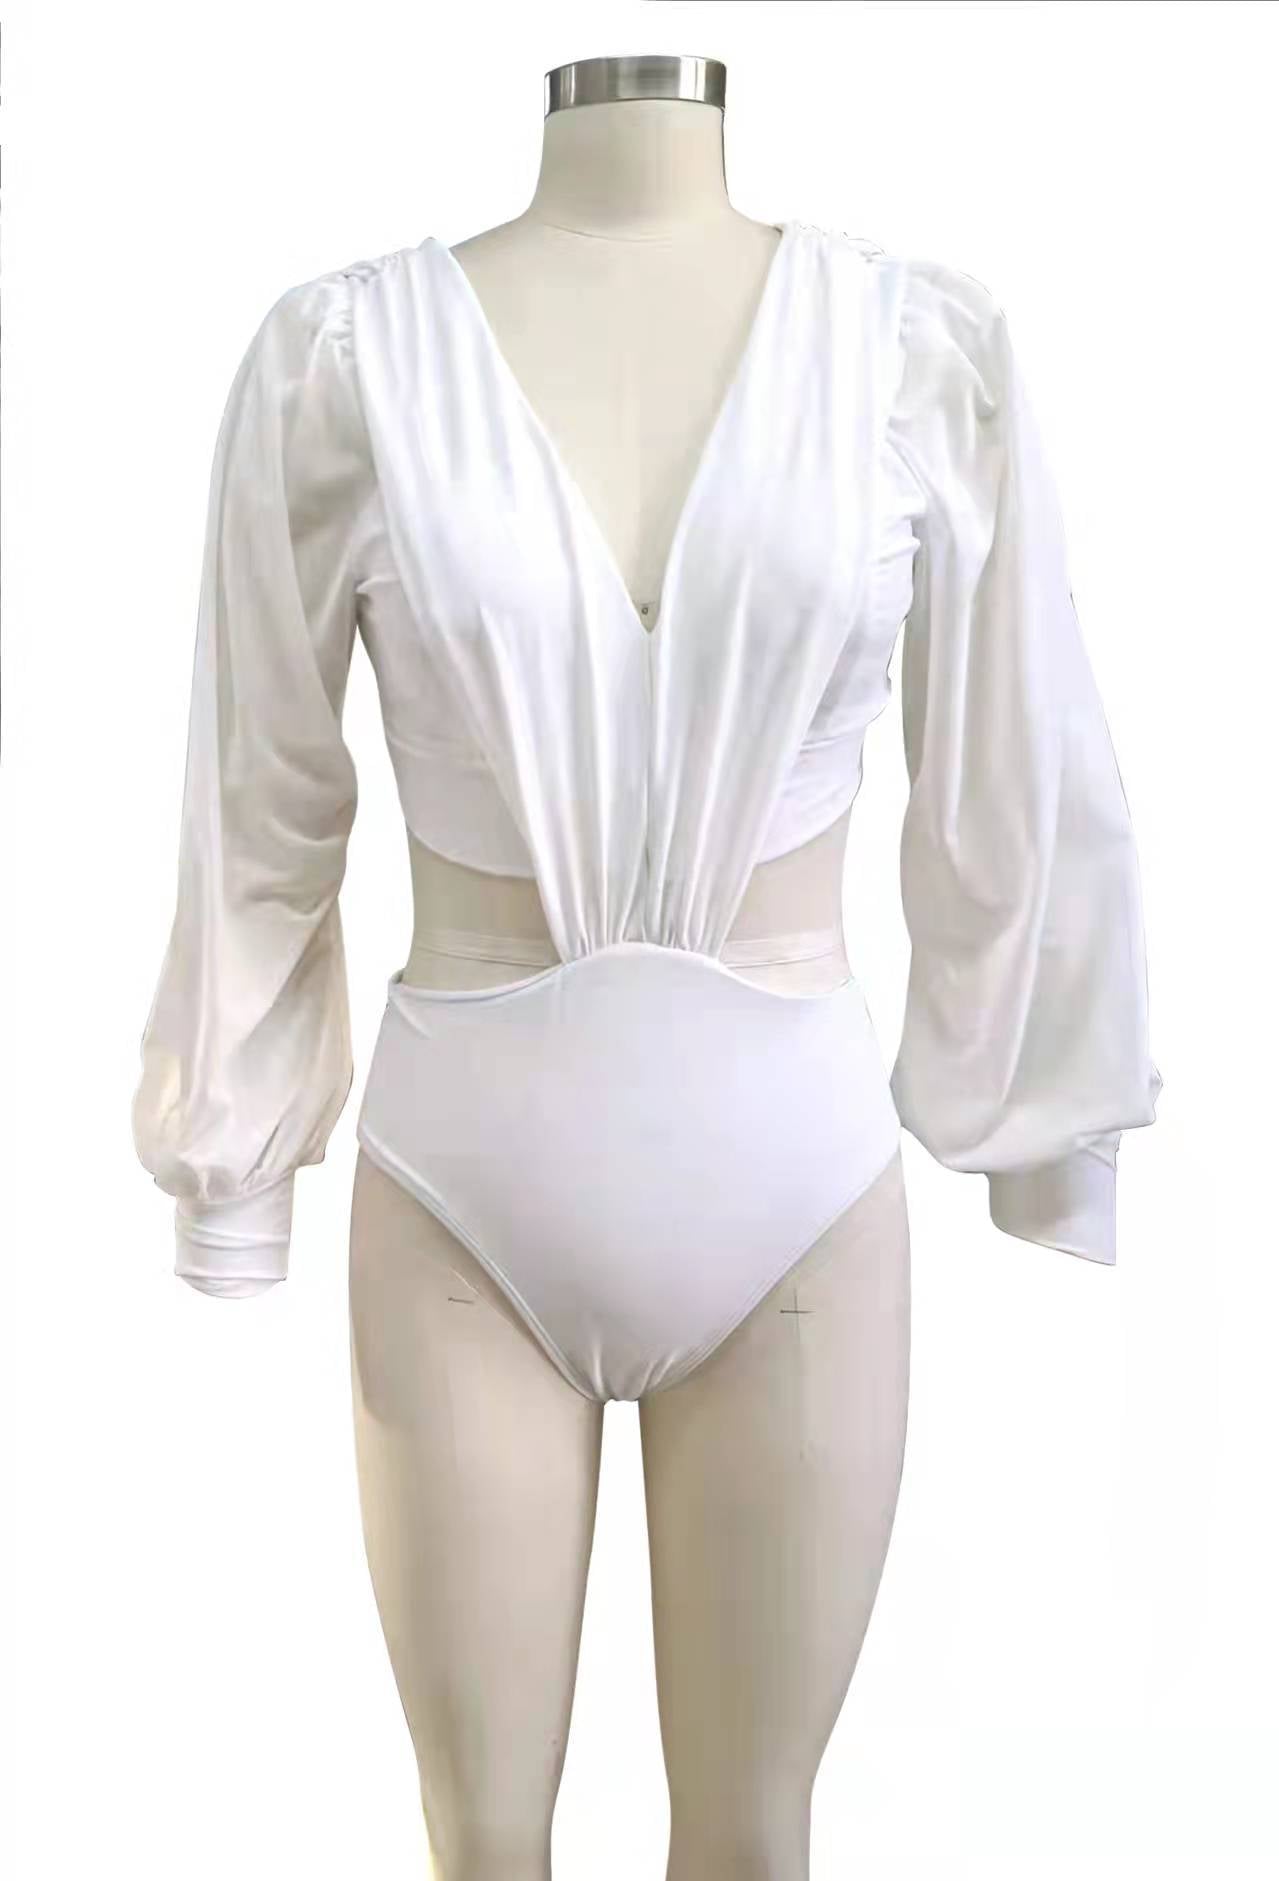 Sexy Long Sleeves Summer Bikini Swimsuits-Swimwear-White-S-Free Shipping at meselling99